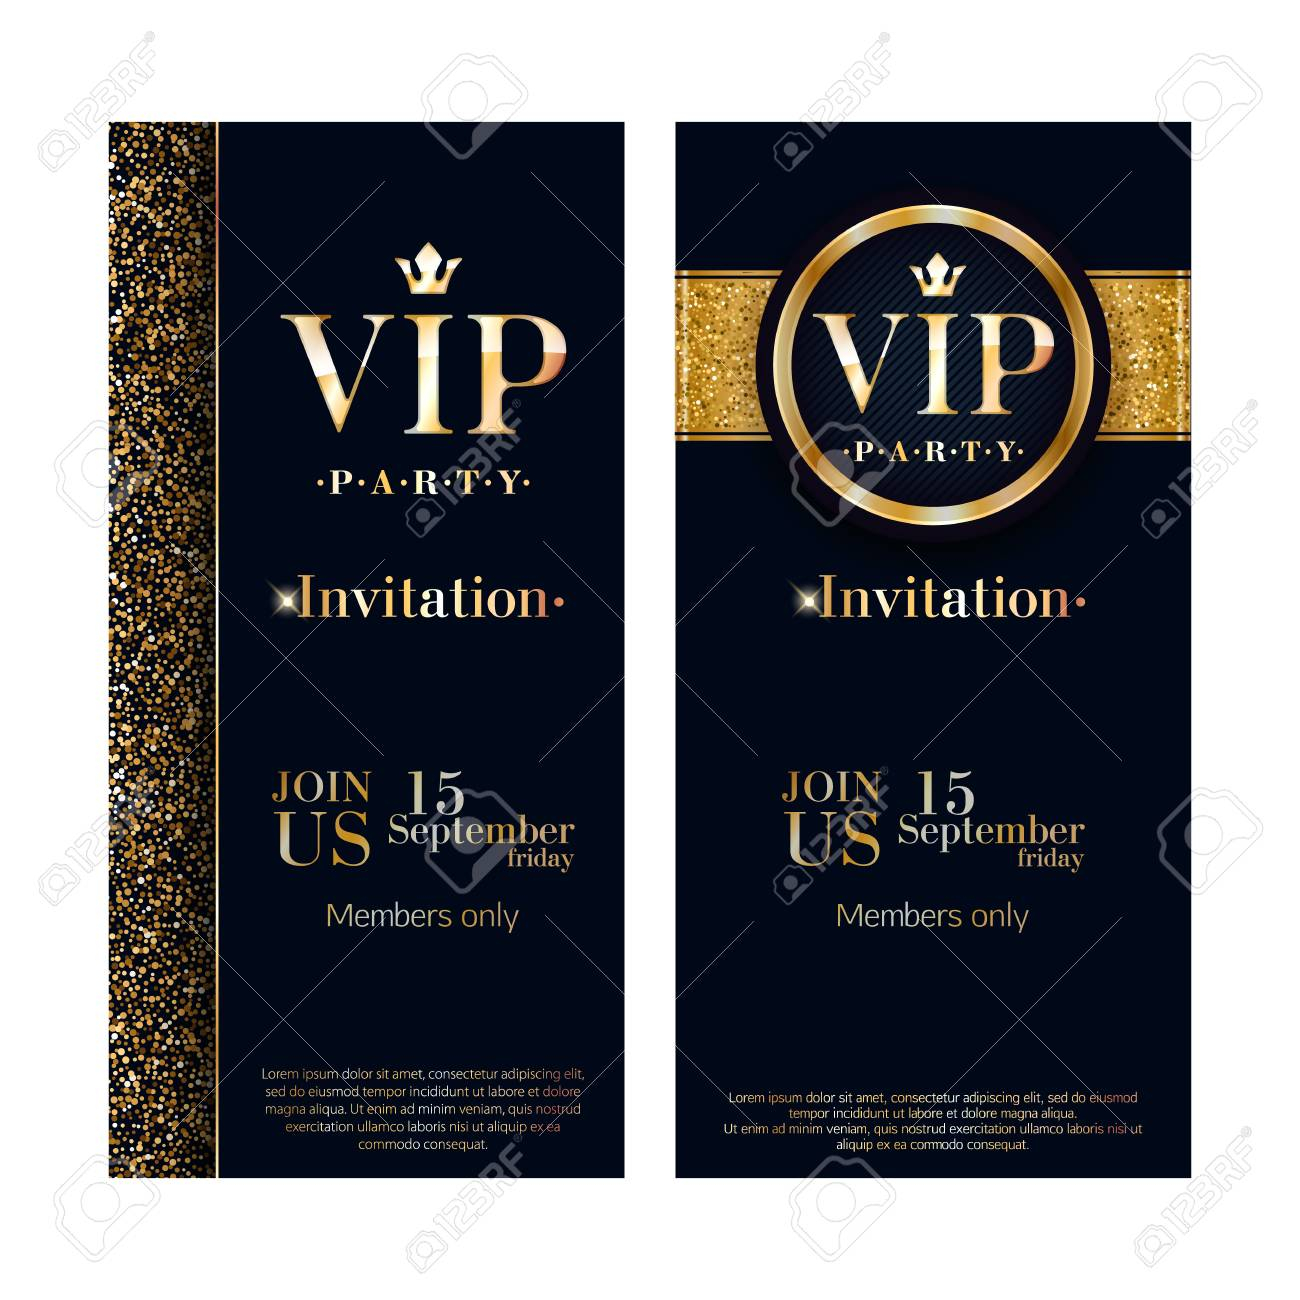 Vip Invitation Card Premium Design Template Royalty Free Cliparts inside sizing 1300 X 1300